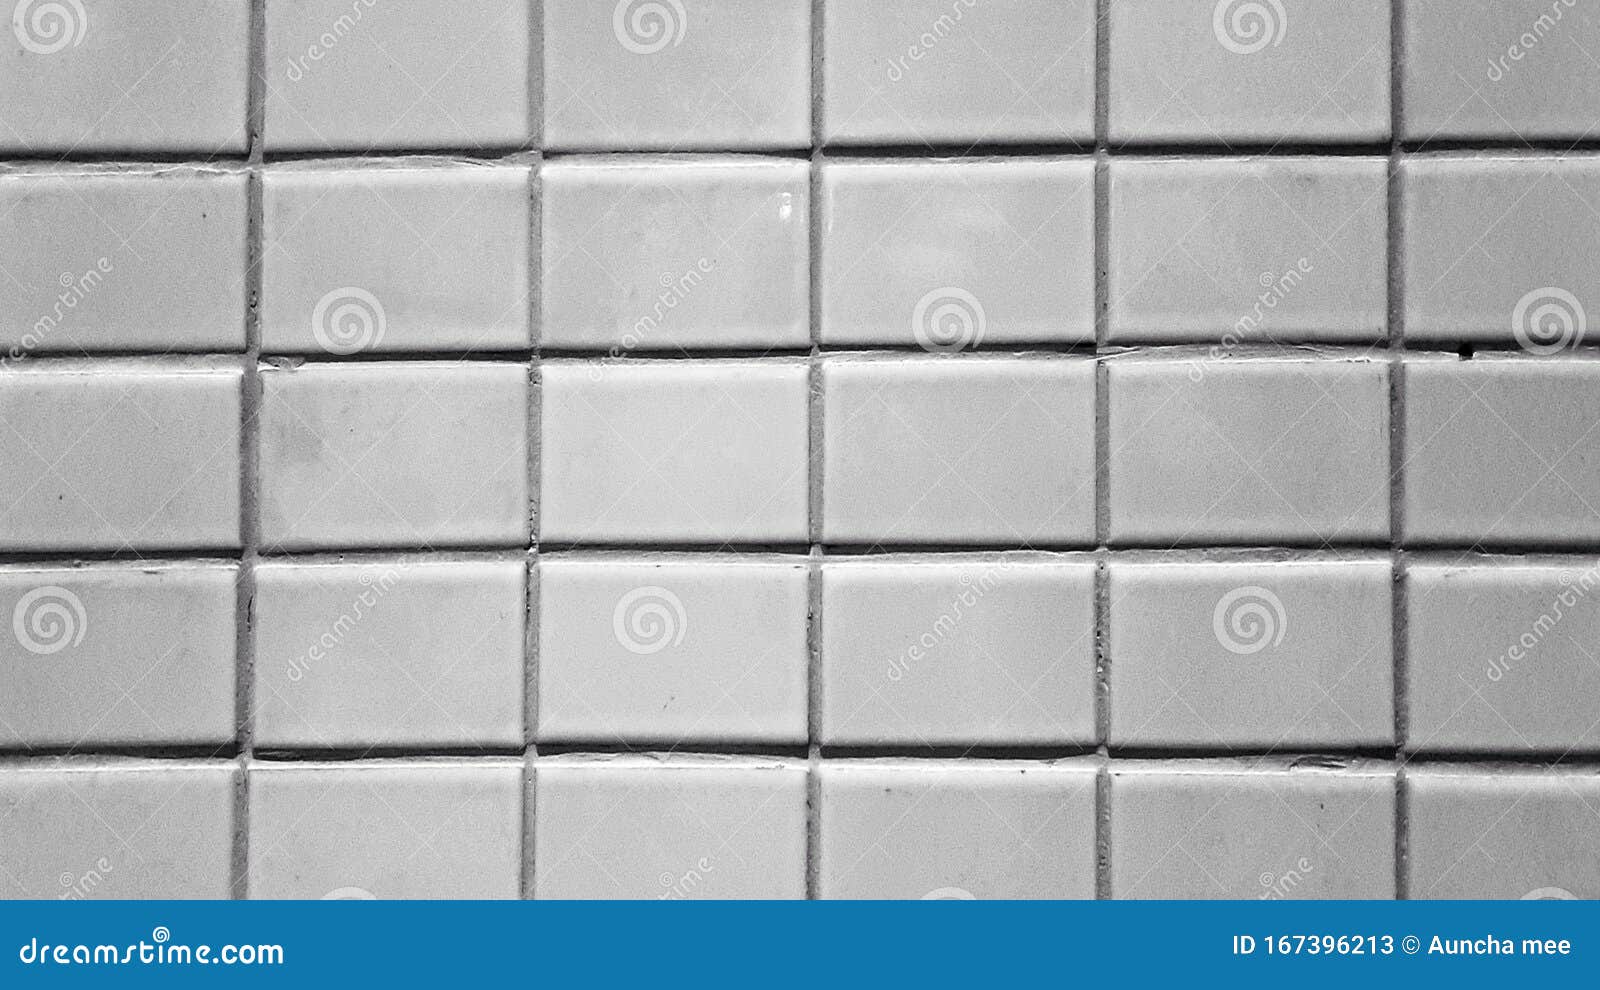 wall decorative brick - image